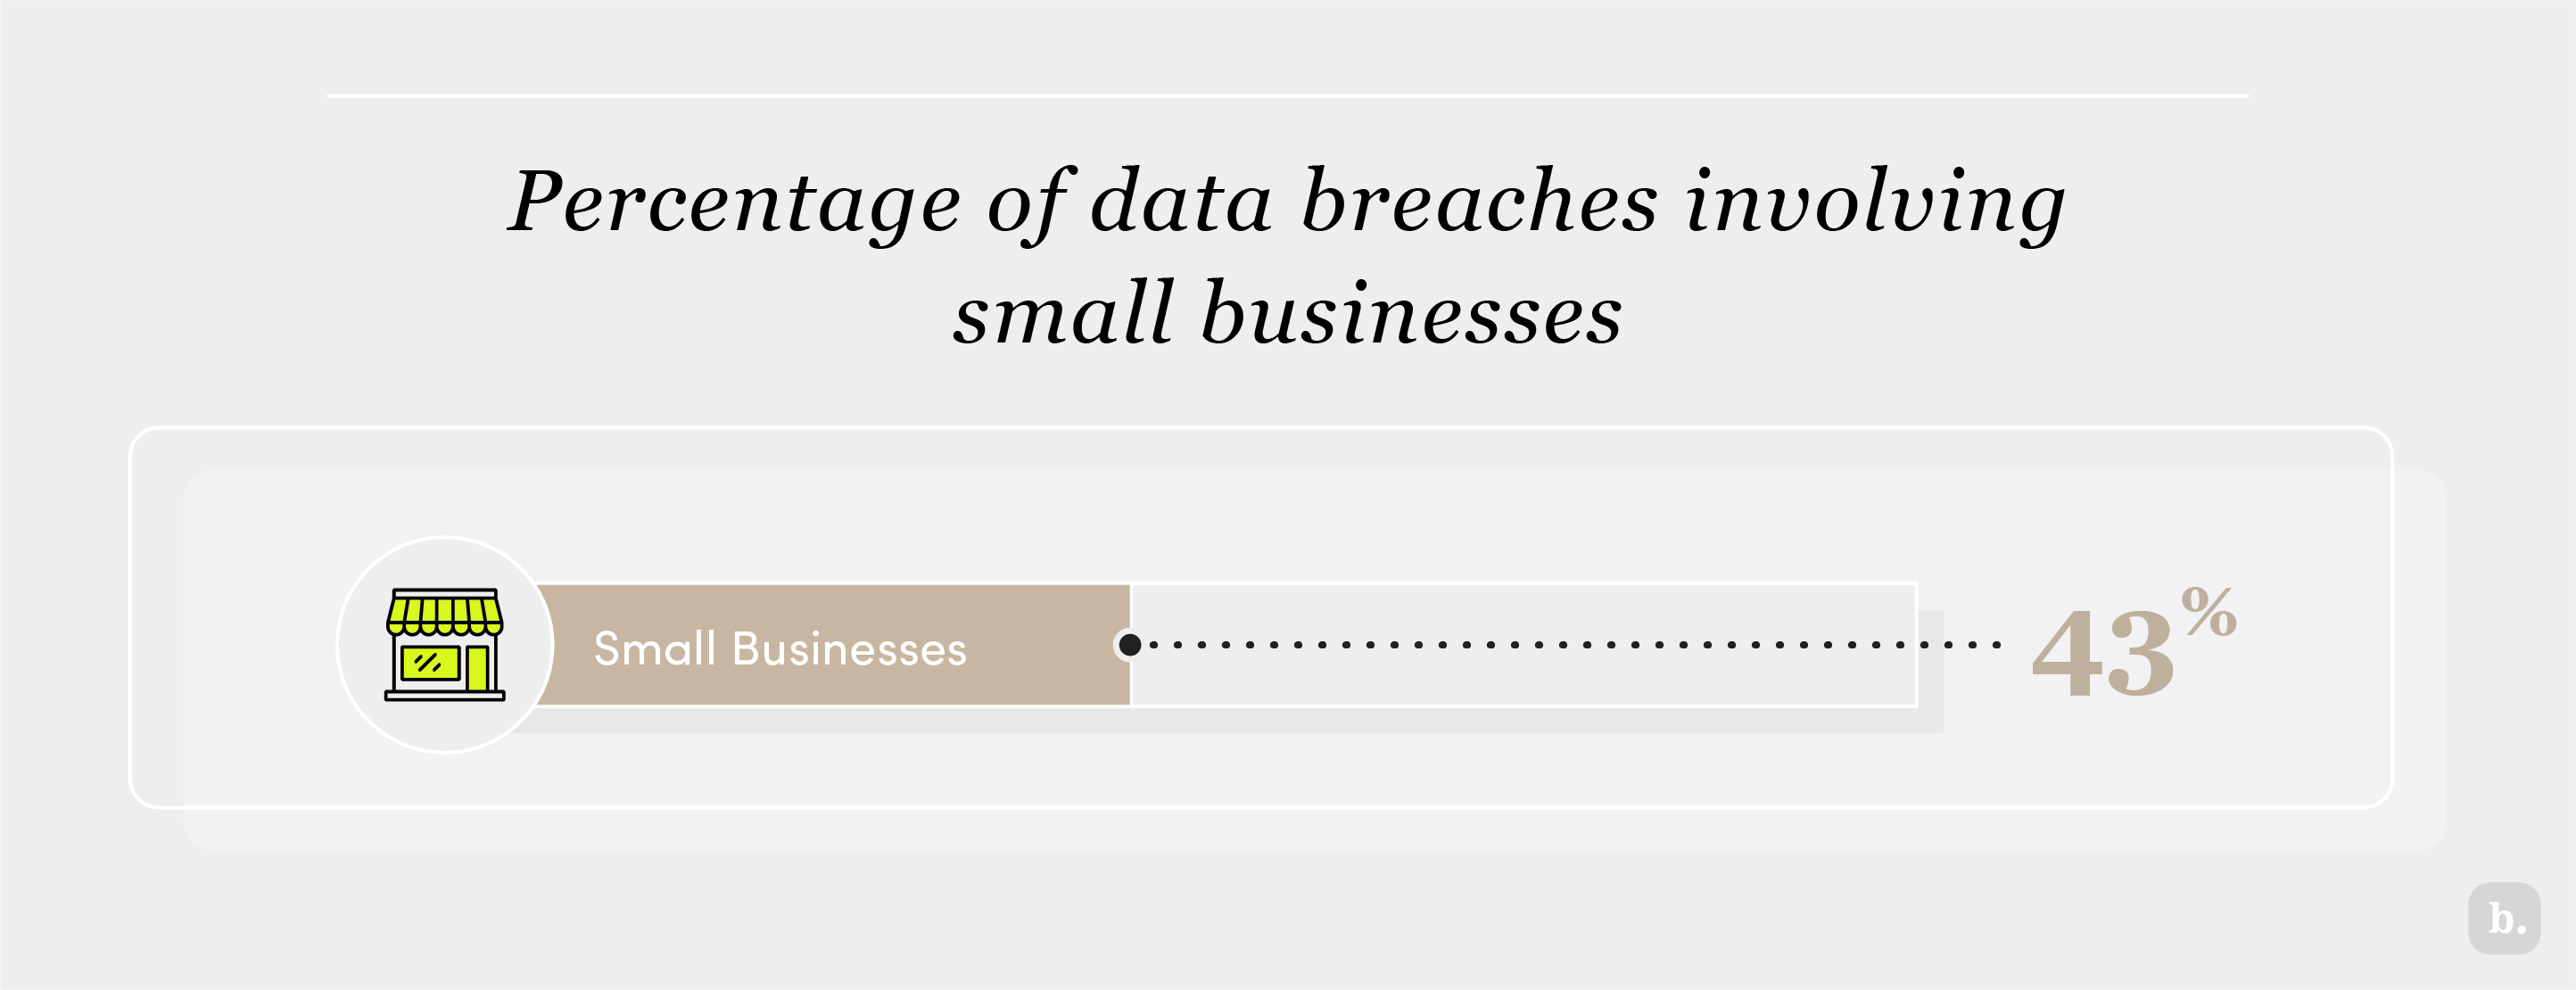 Percentage of data breaches involving small businesses graphic